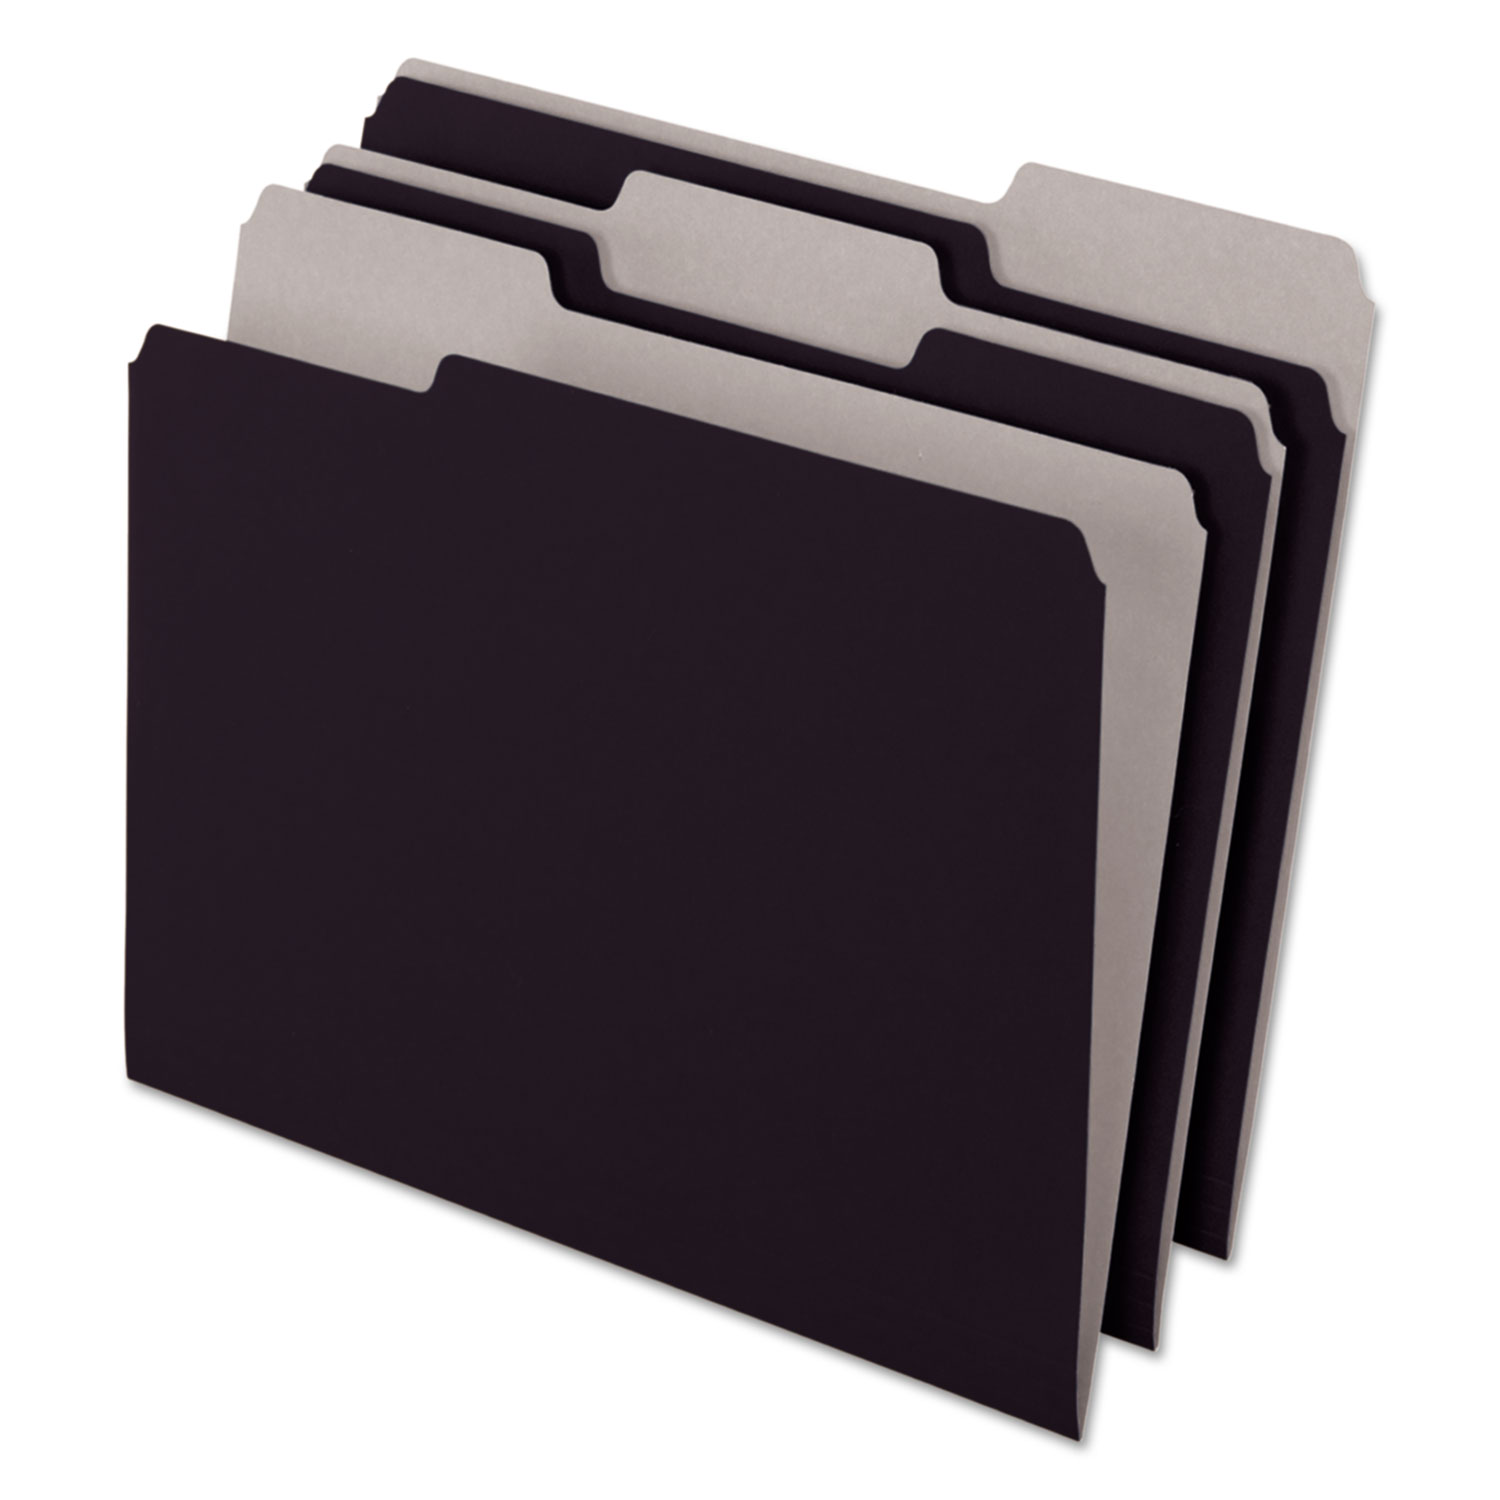  Pendaflex 4210 1/3 BLA Interior File Folders, 1/3-Cut Tabs, Letter Size, Black/Gray, 100/Box (PFX421013BLA) 